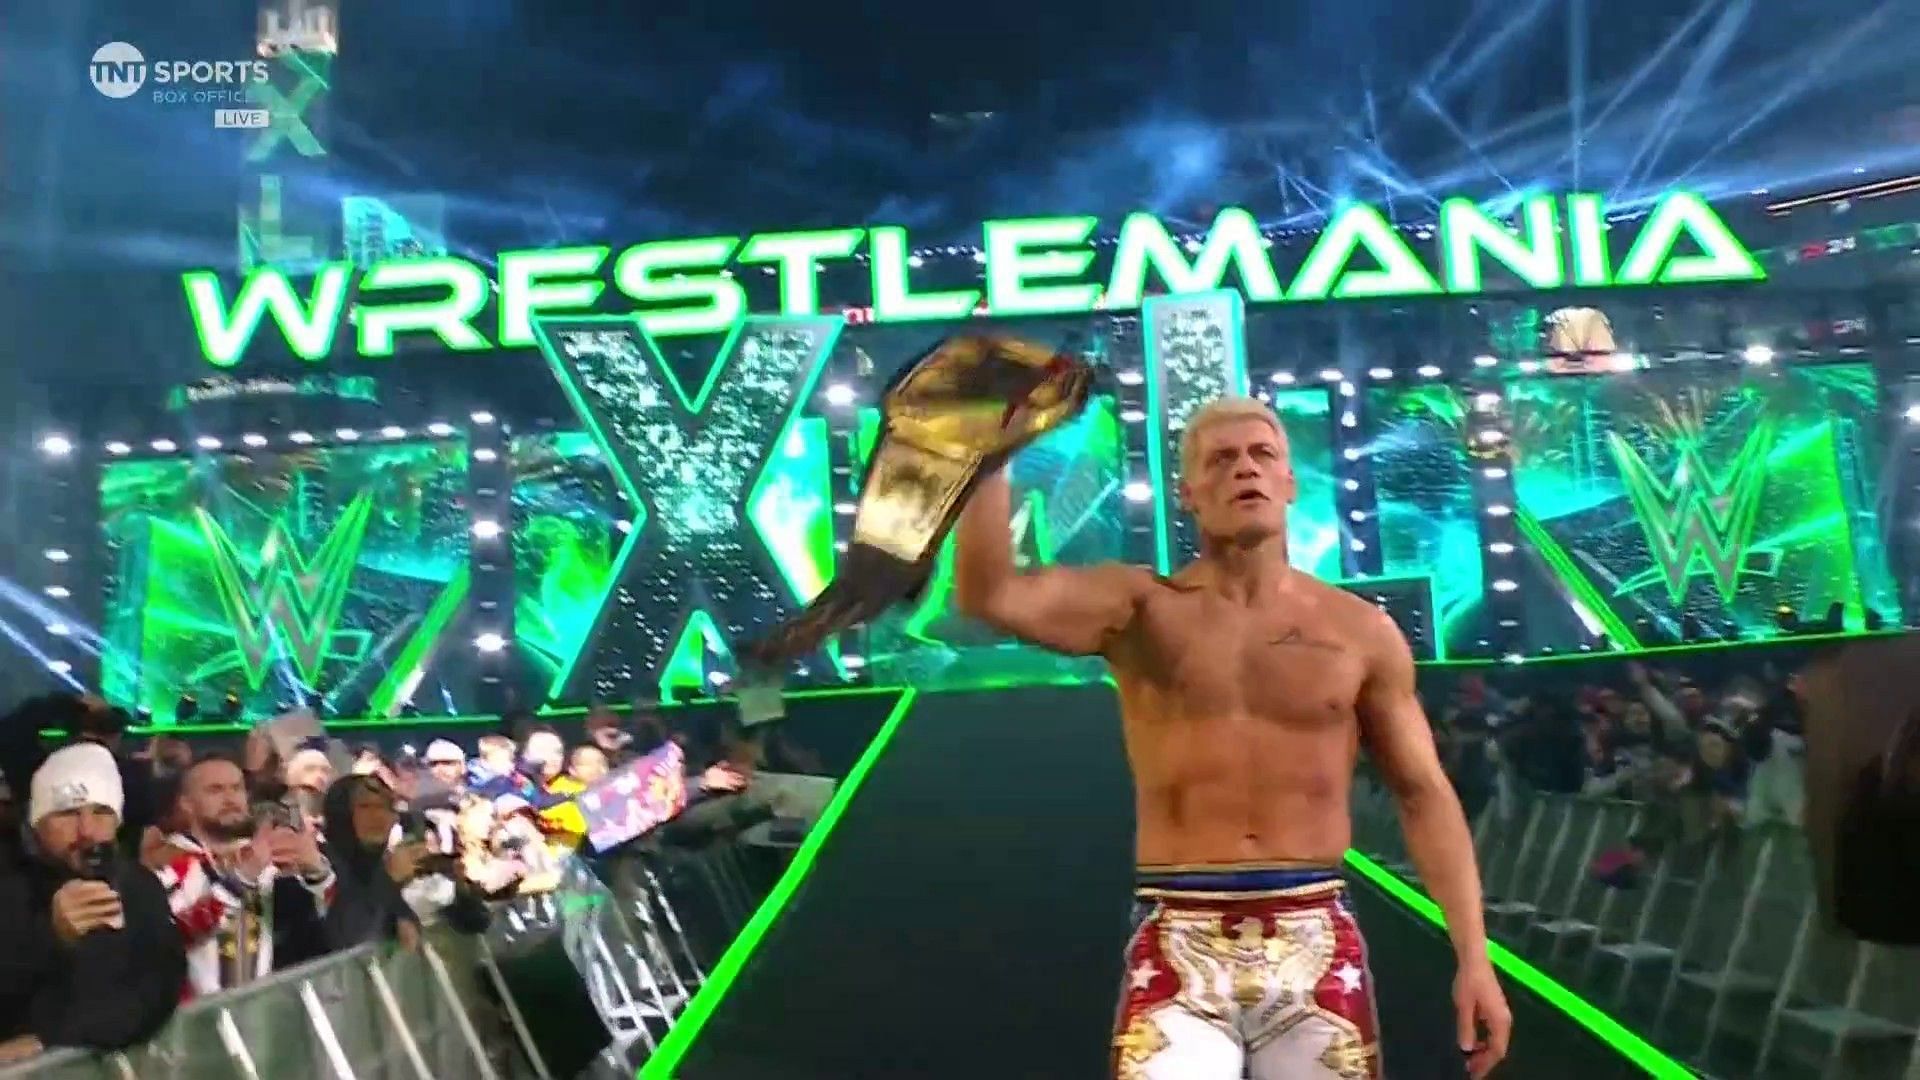 Cody Rhodes won the Universal Championship at WrestleMania